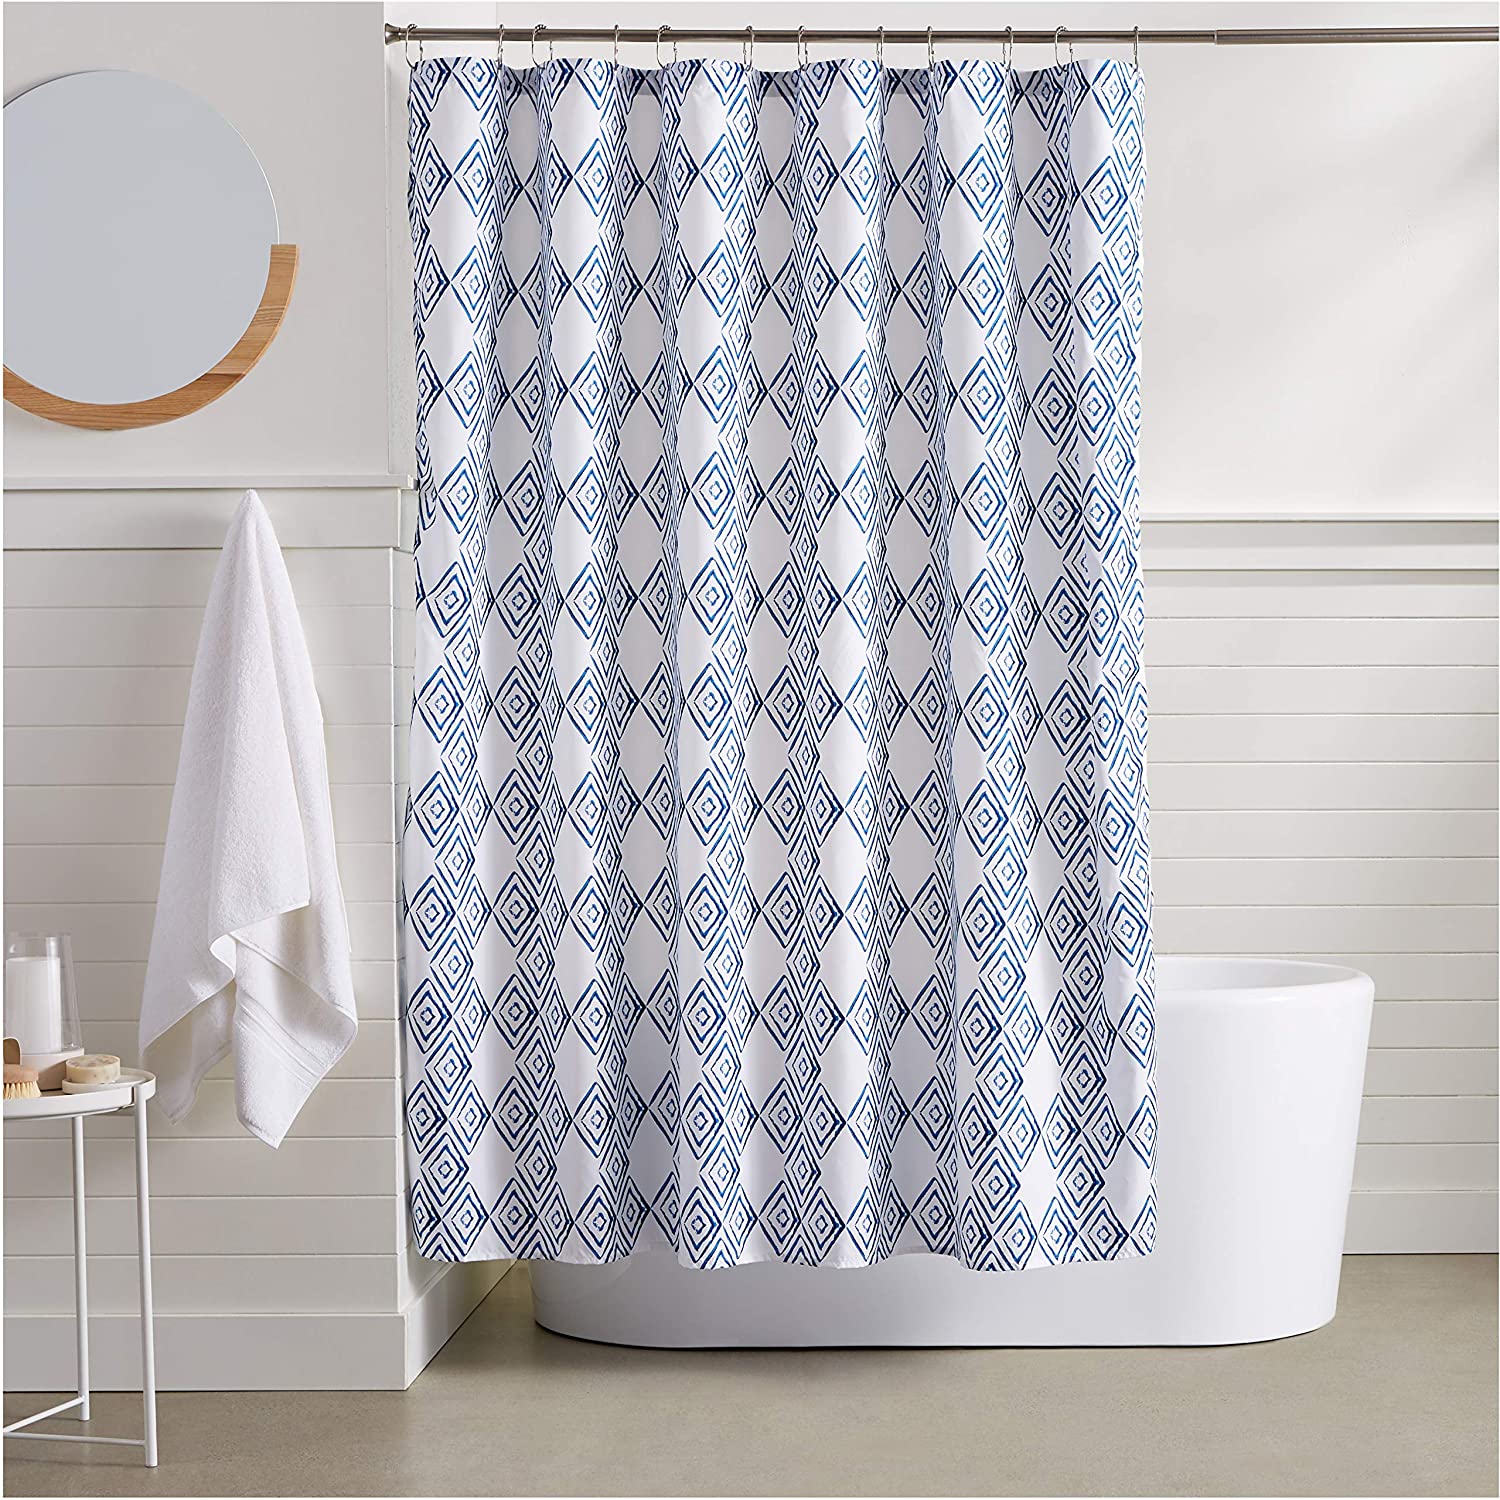 AmazonBasics Diamond Bathroom Shower Curtain